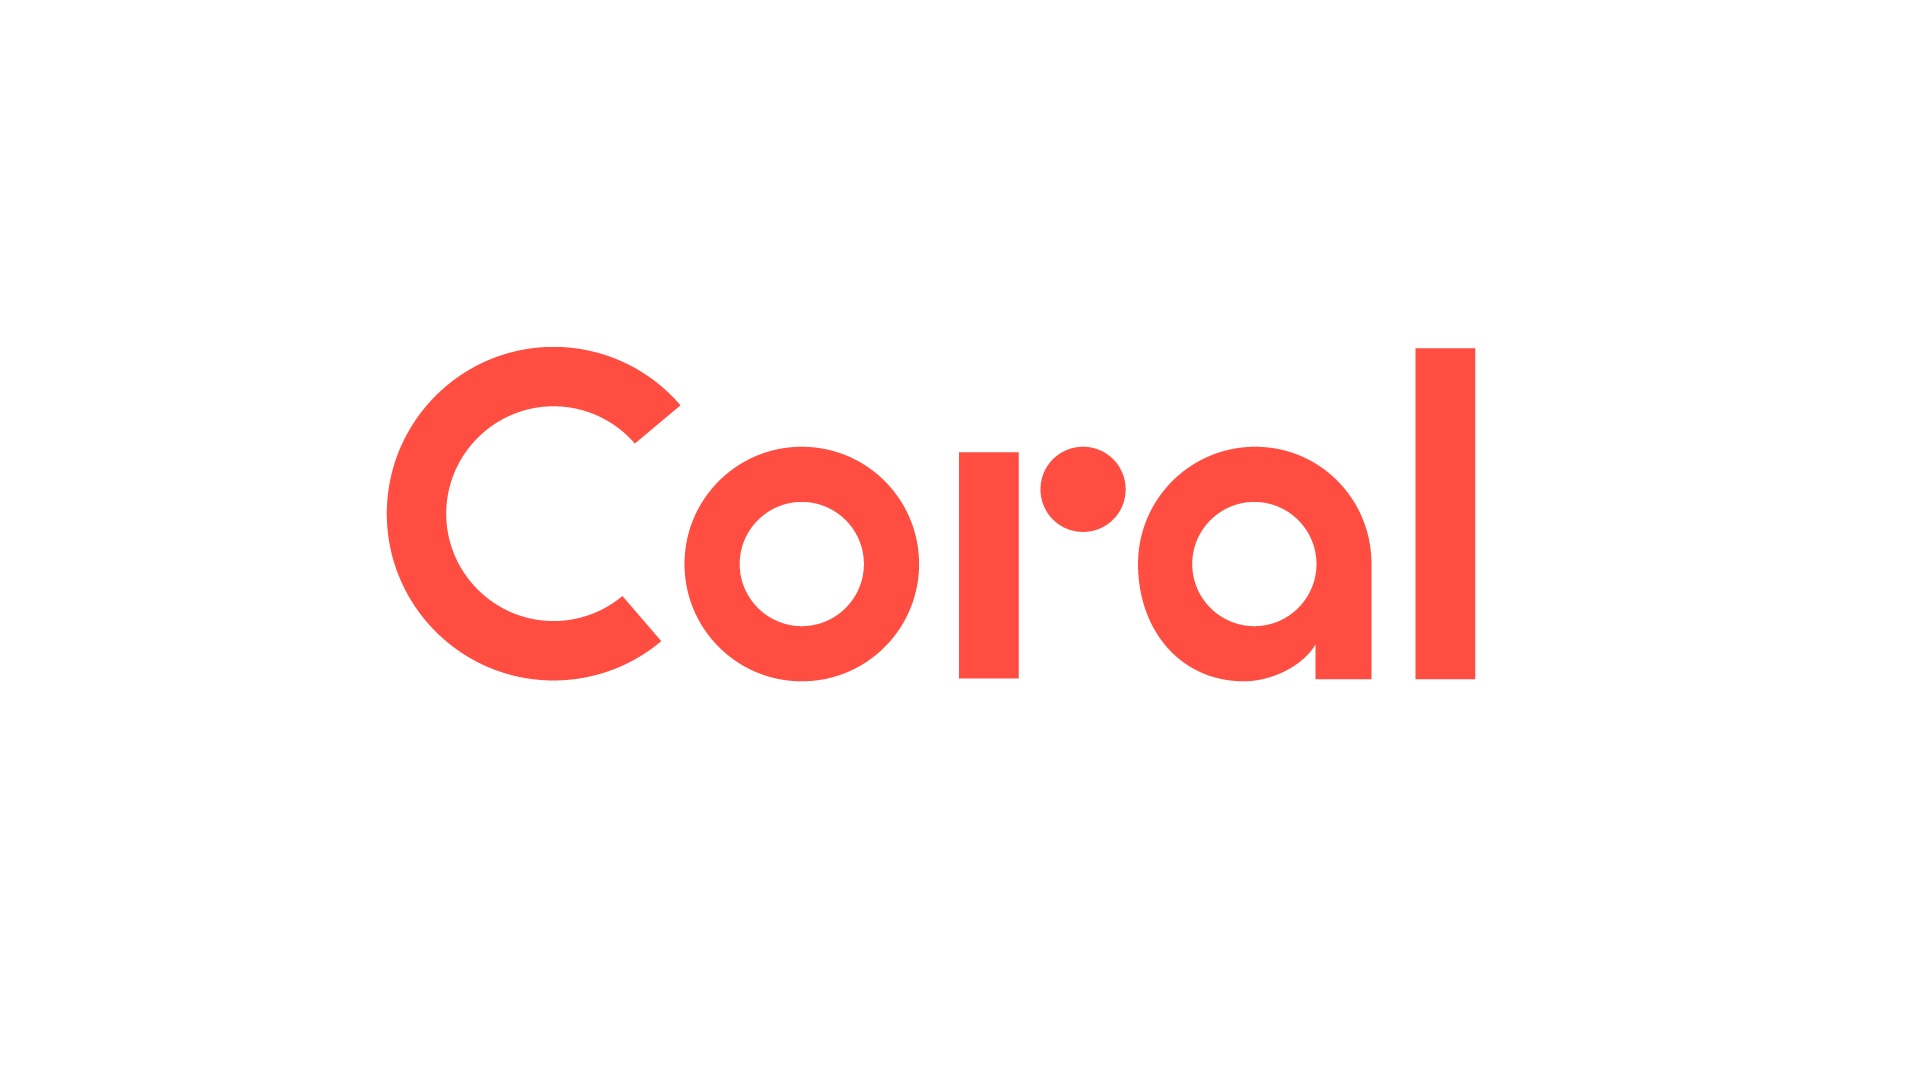 Coral поиск. Coral Travel логотип. Логотип фирмы Coral. Корал логотип туроператор. Corall логотип вектор.